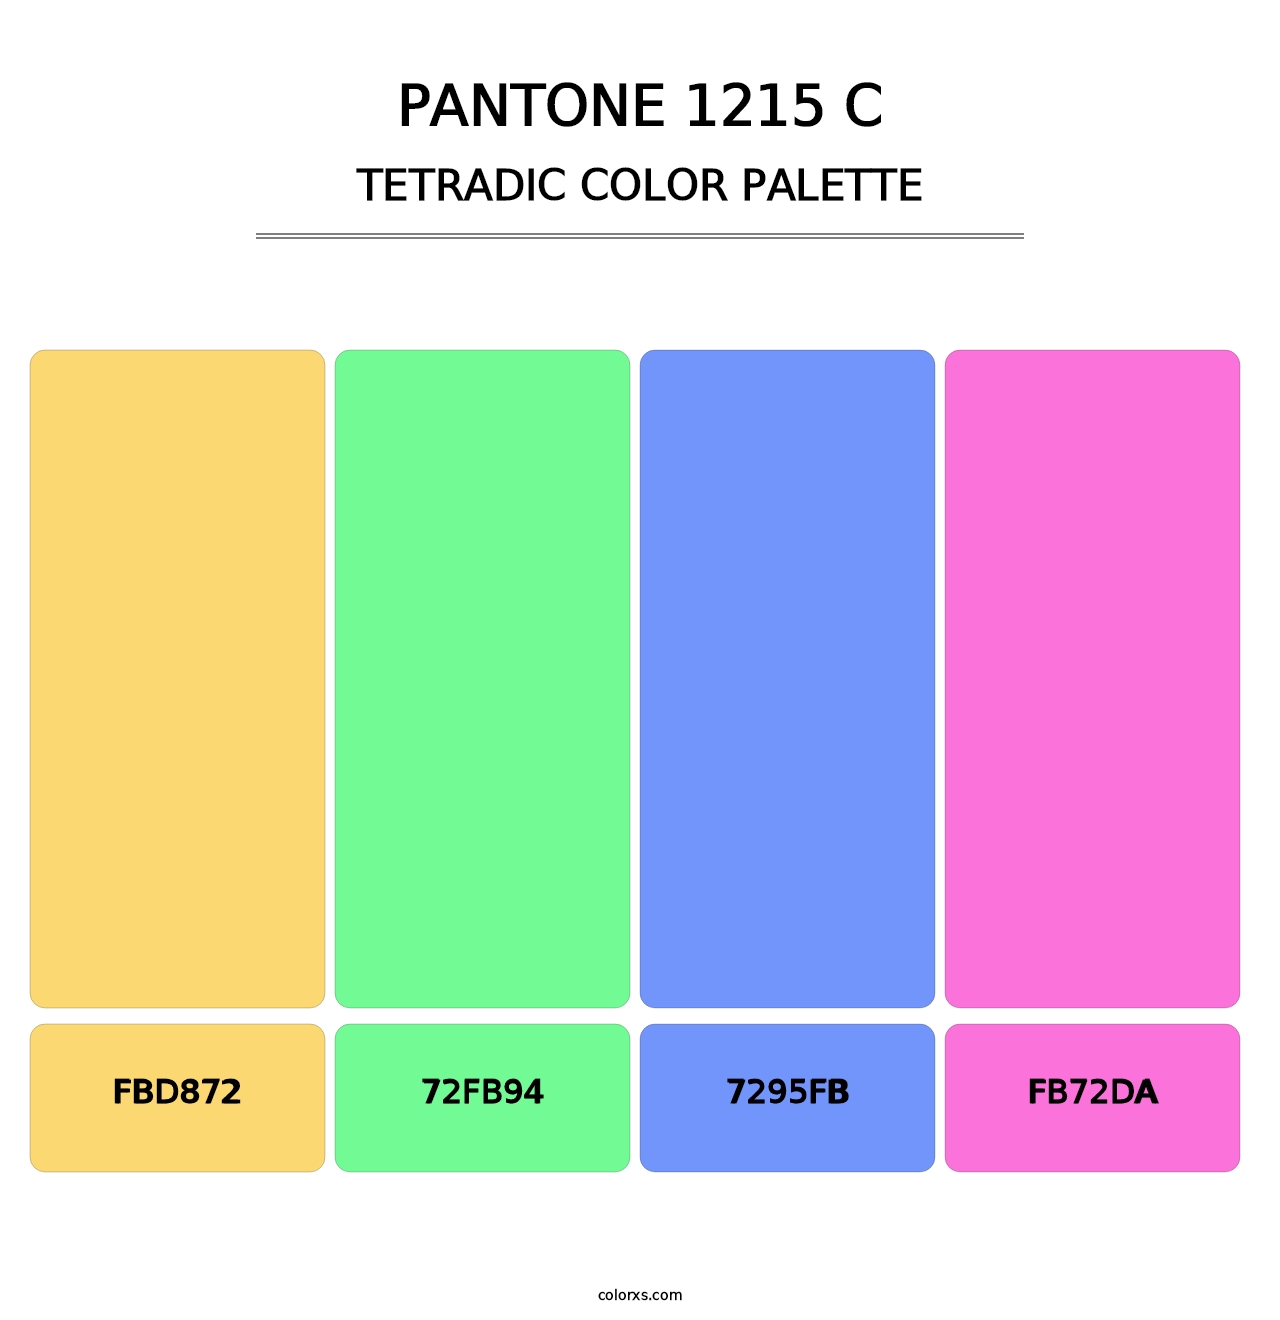 PANTONE 1215 C - Tetradic Color Palette